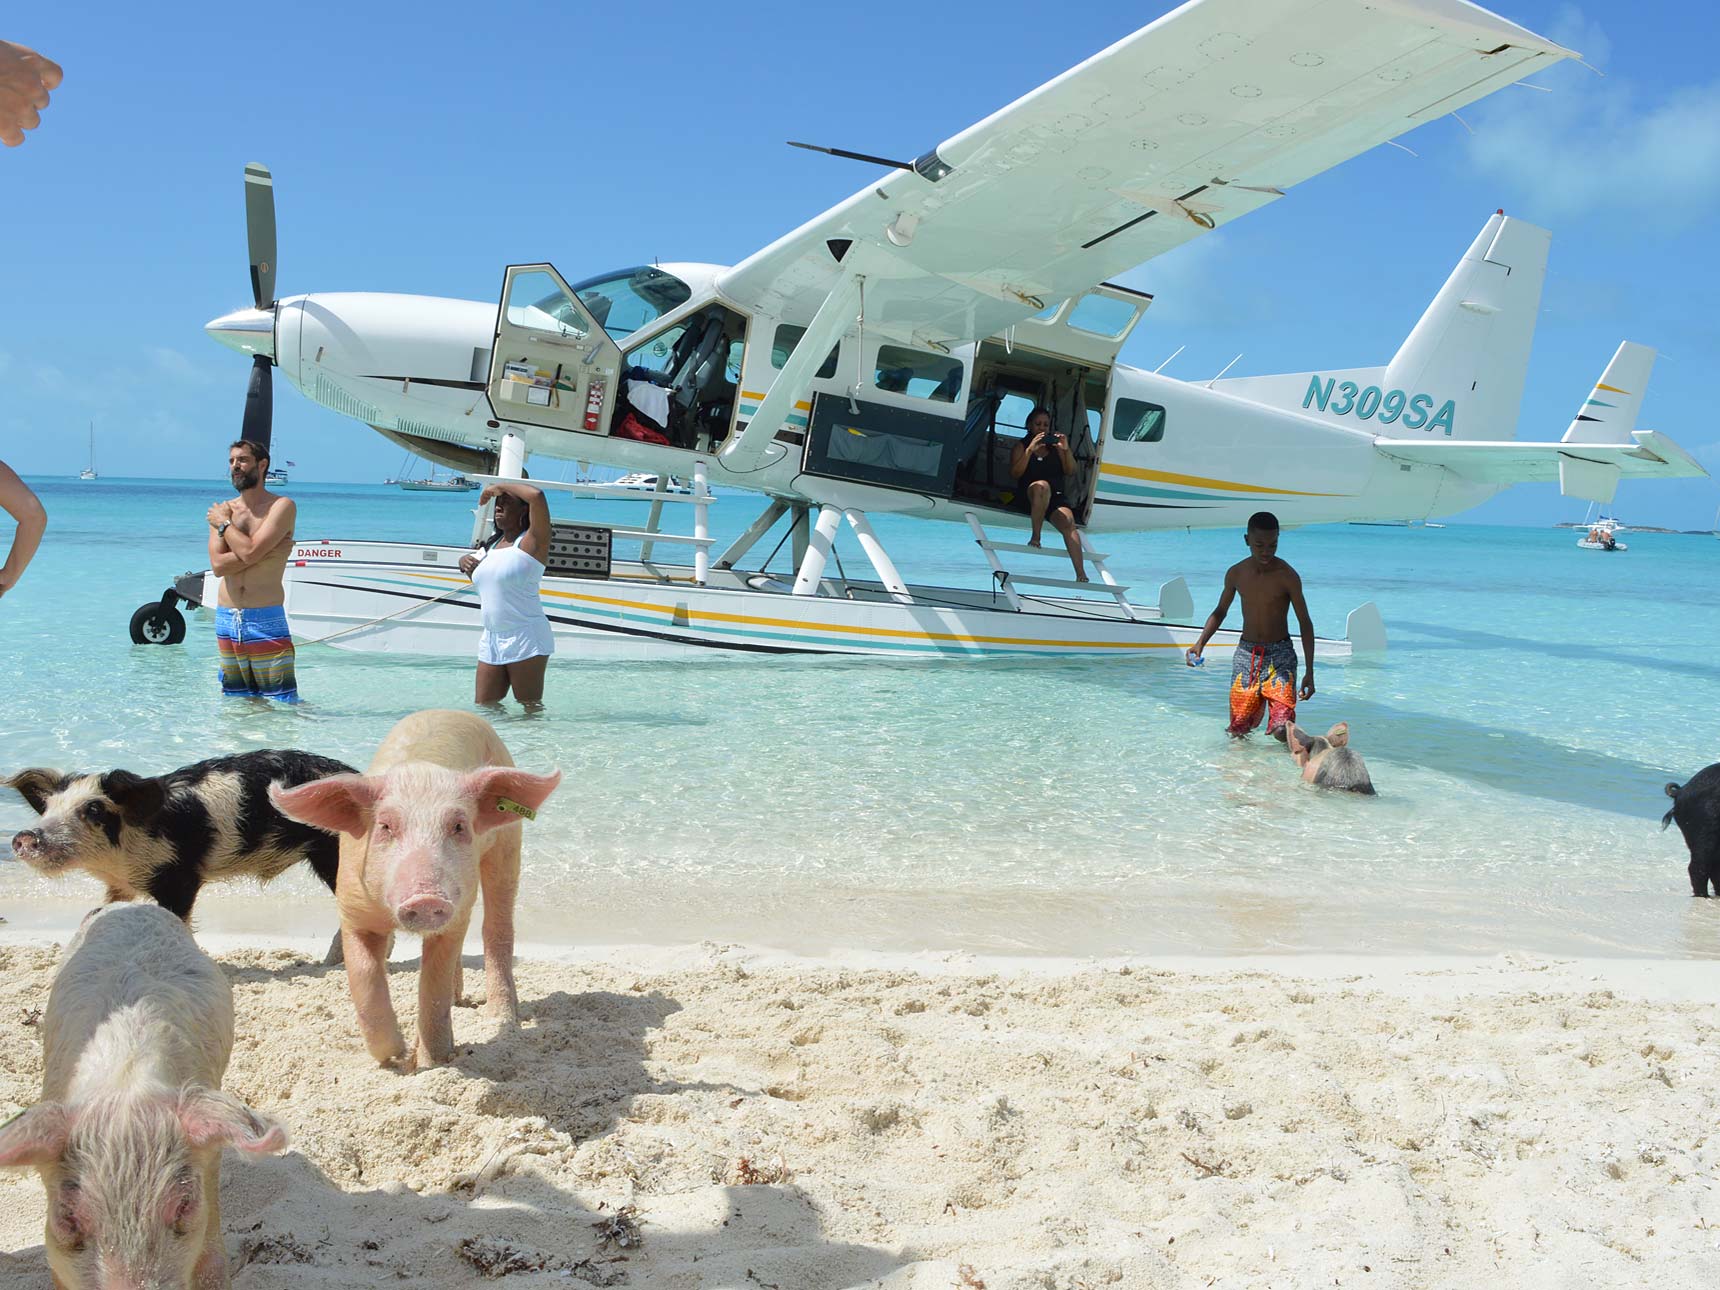 Seabird Air Seaplane Charters servicing The Bahamas